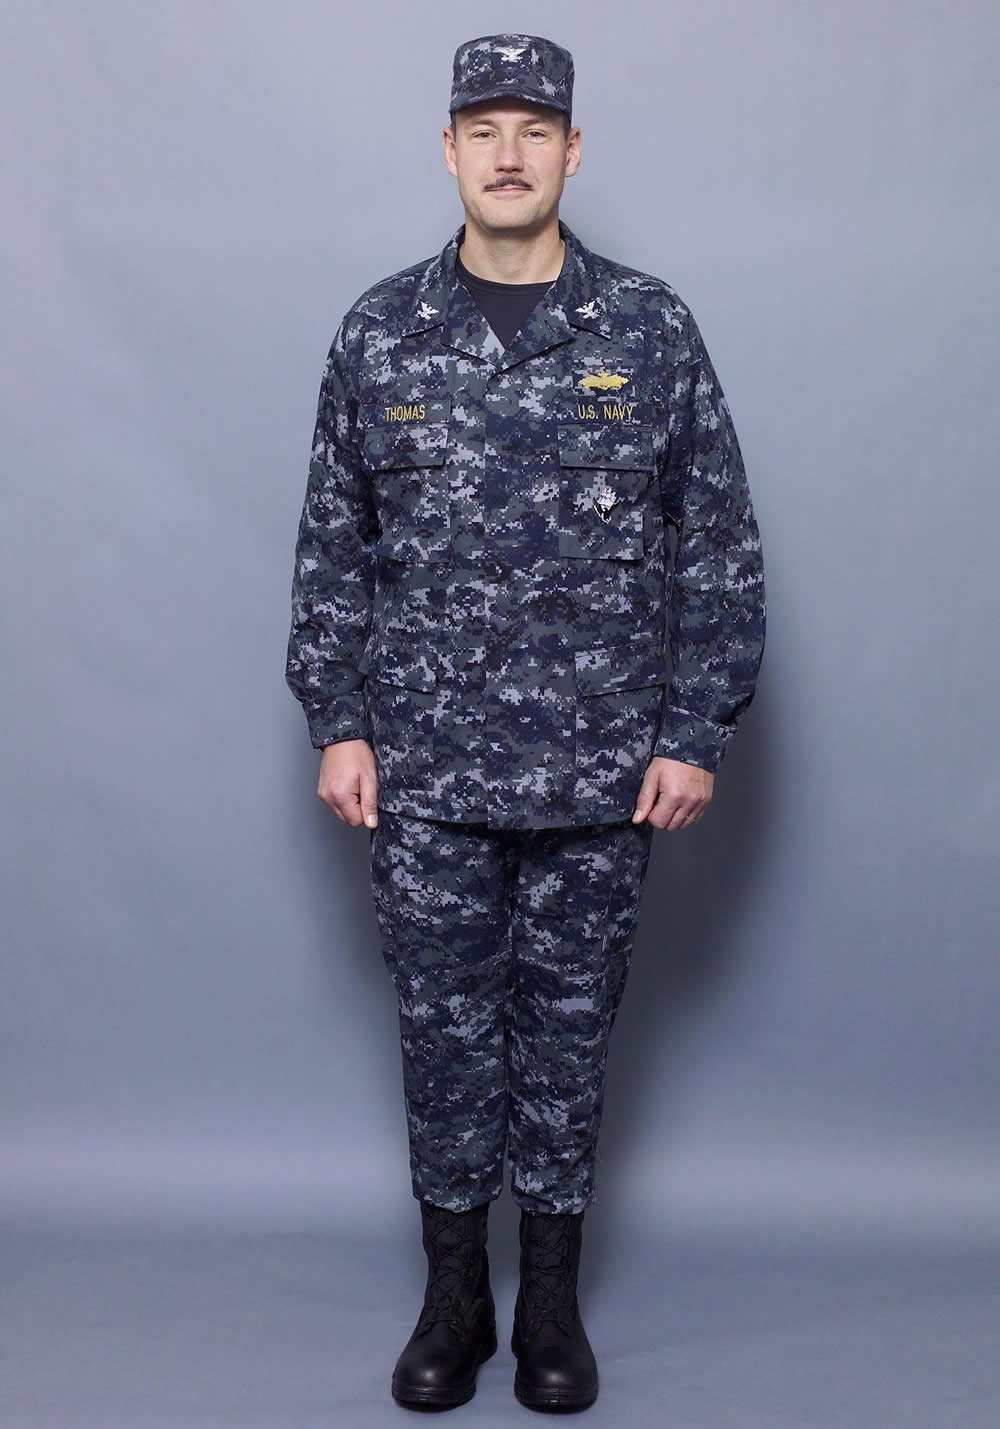 New Navy Uniform 81